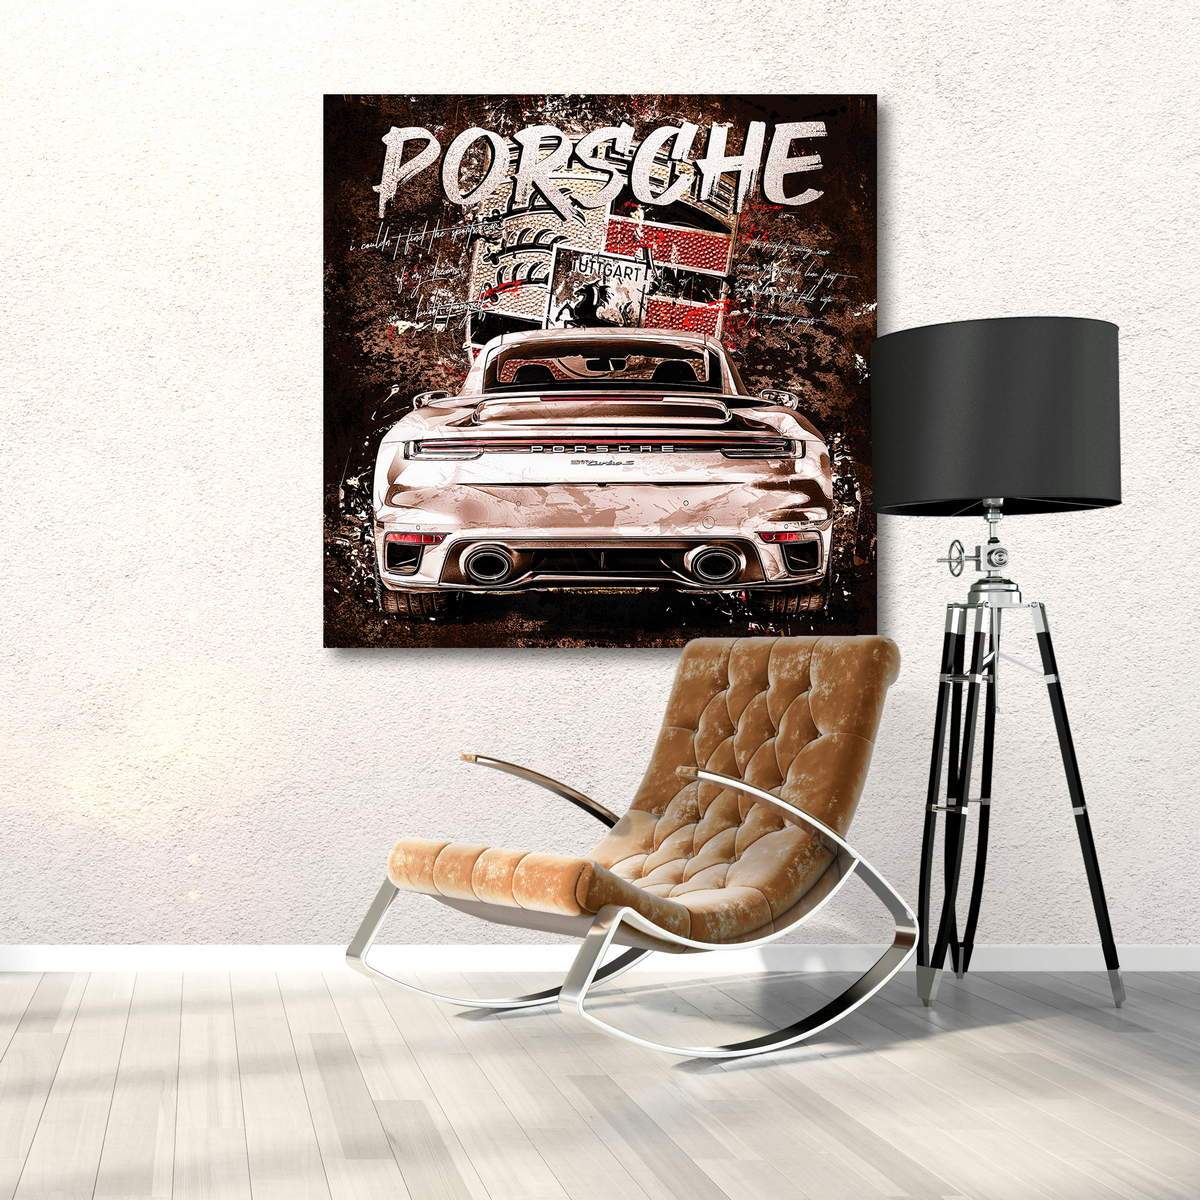 Porsche Wandbild Kunstgestalten24